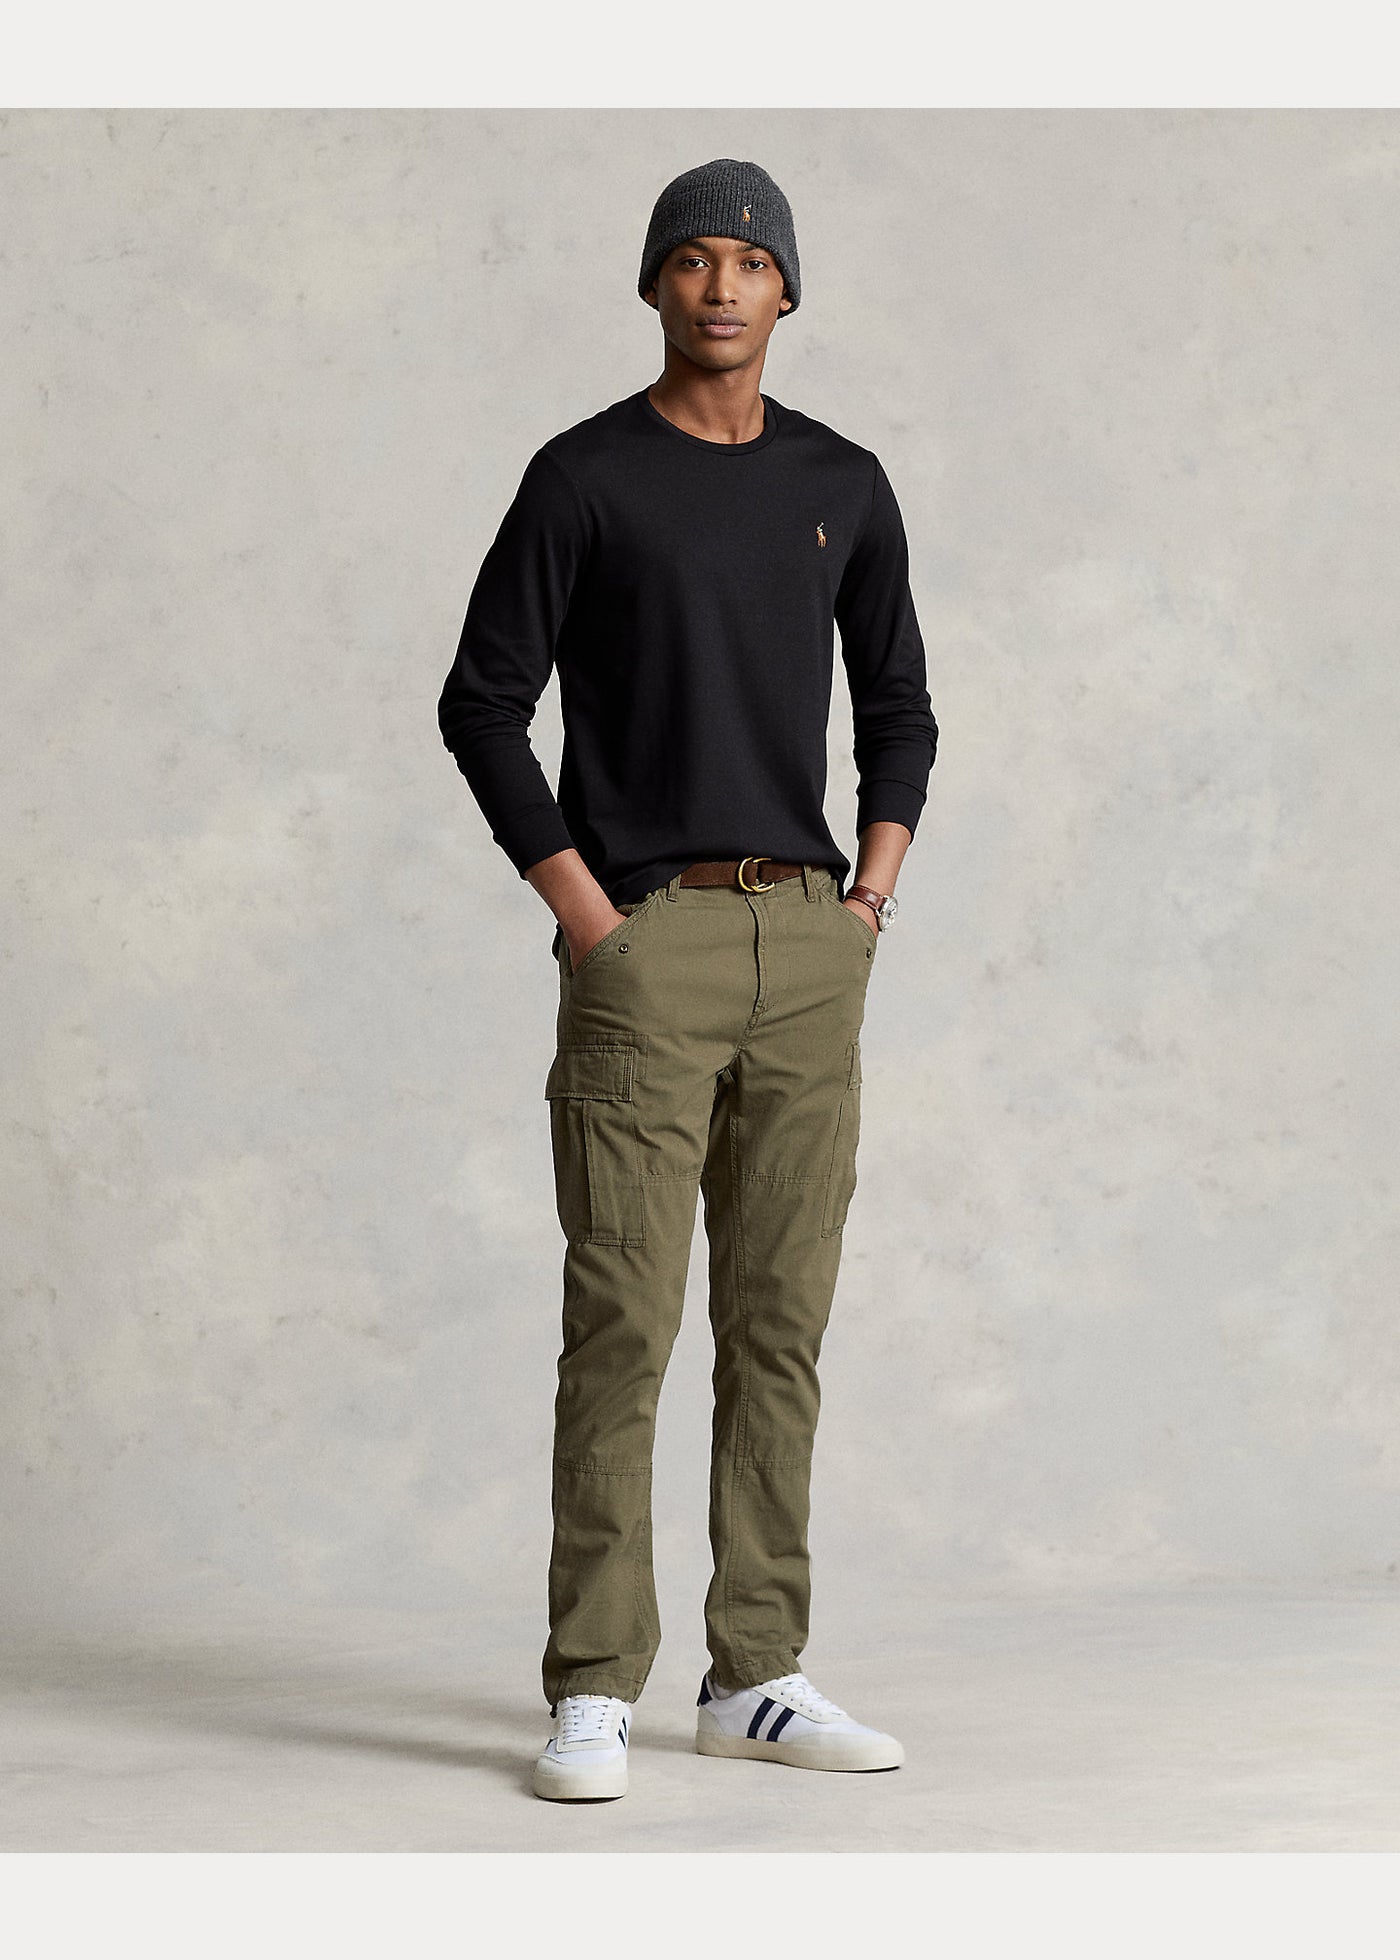 Ralph Lauren Custom Slim Fit Soft Cotton T-Shirt | Μαύρο